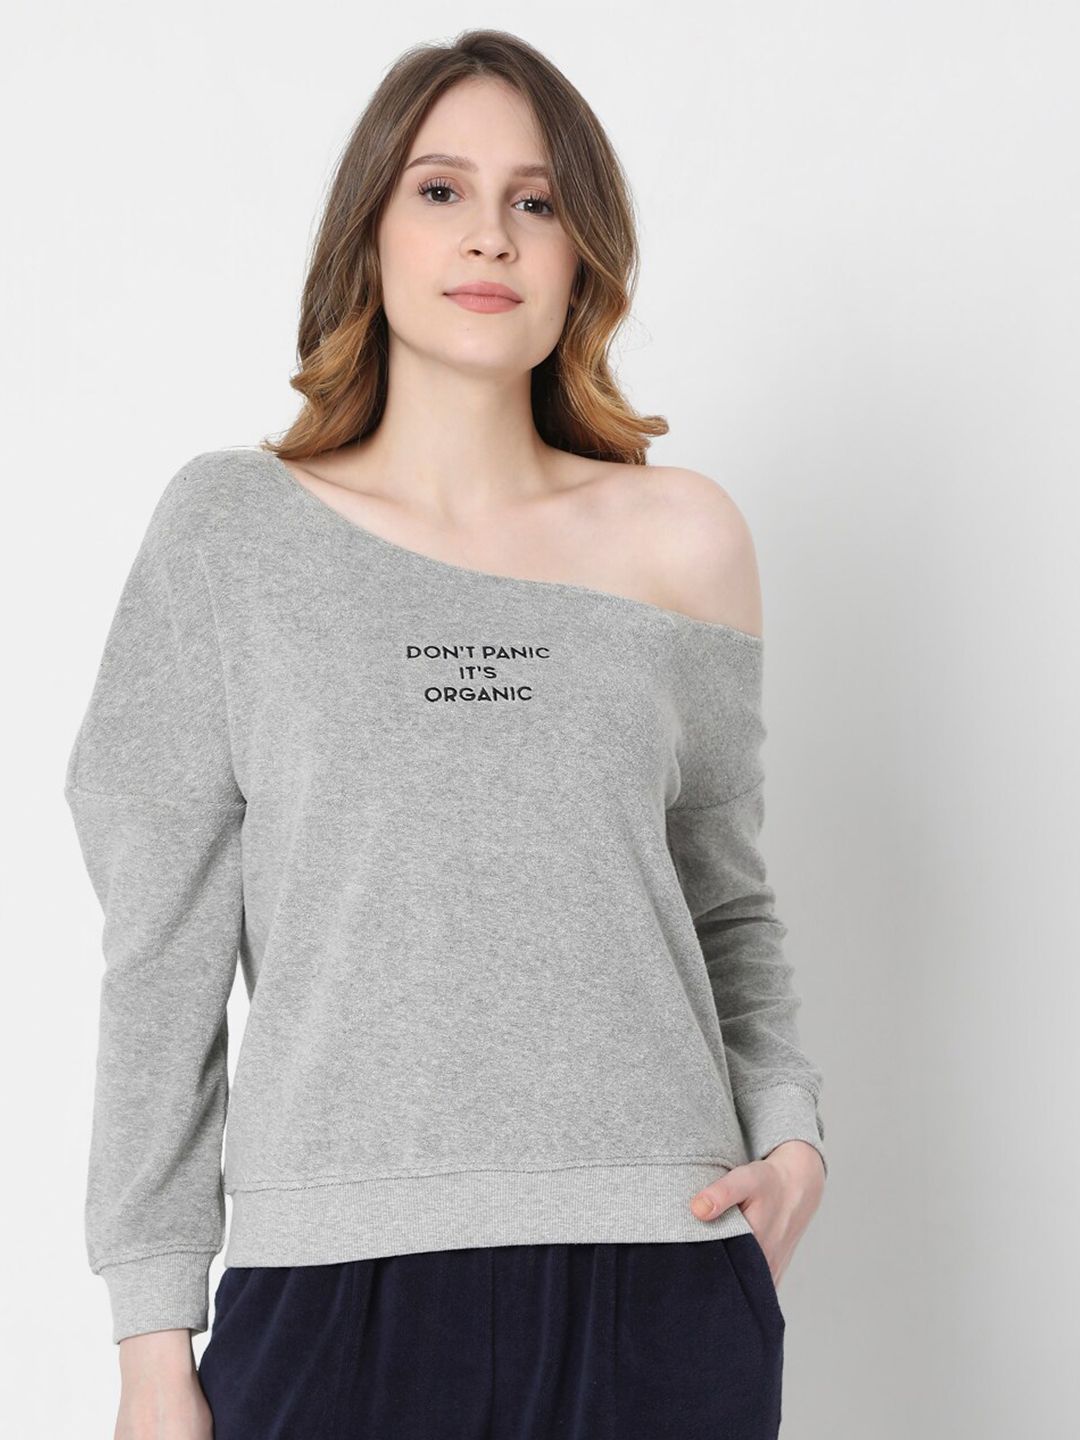 Vero Moda Women Grey Sweatshirt Price in India